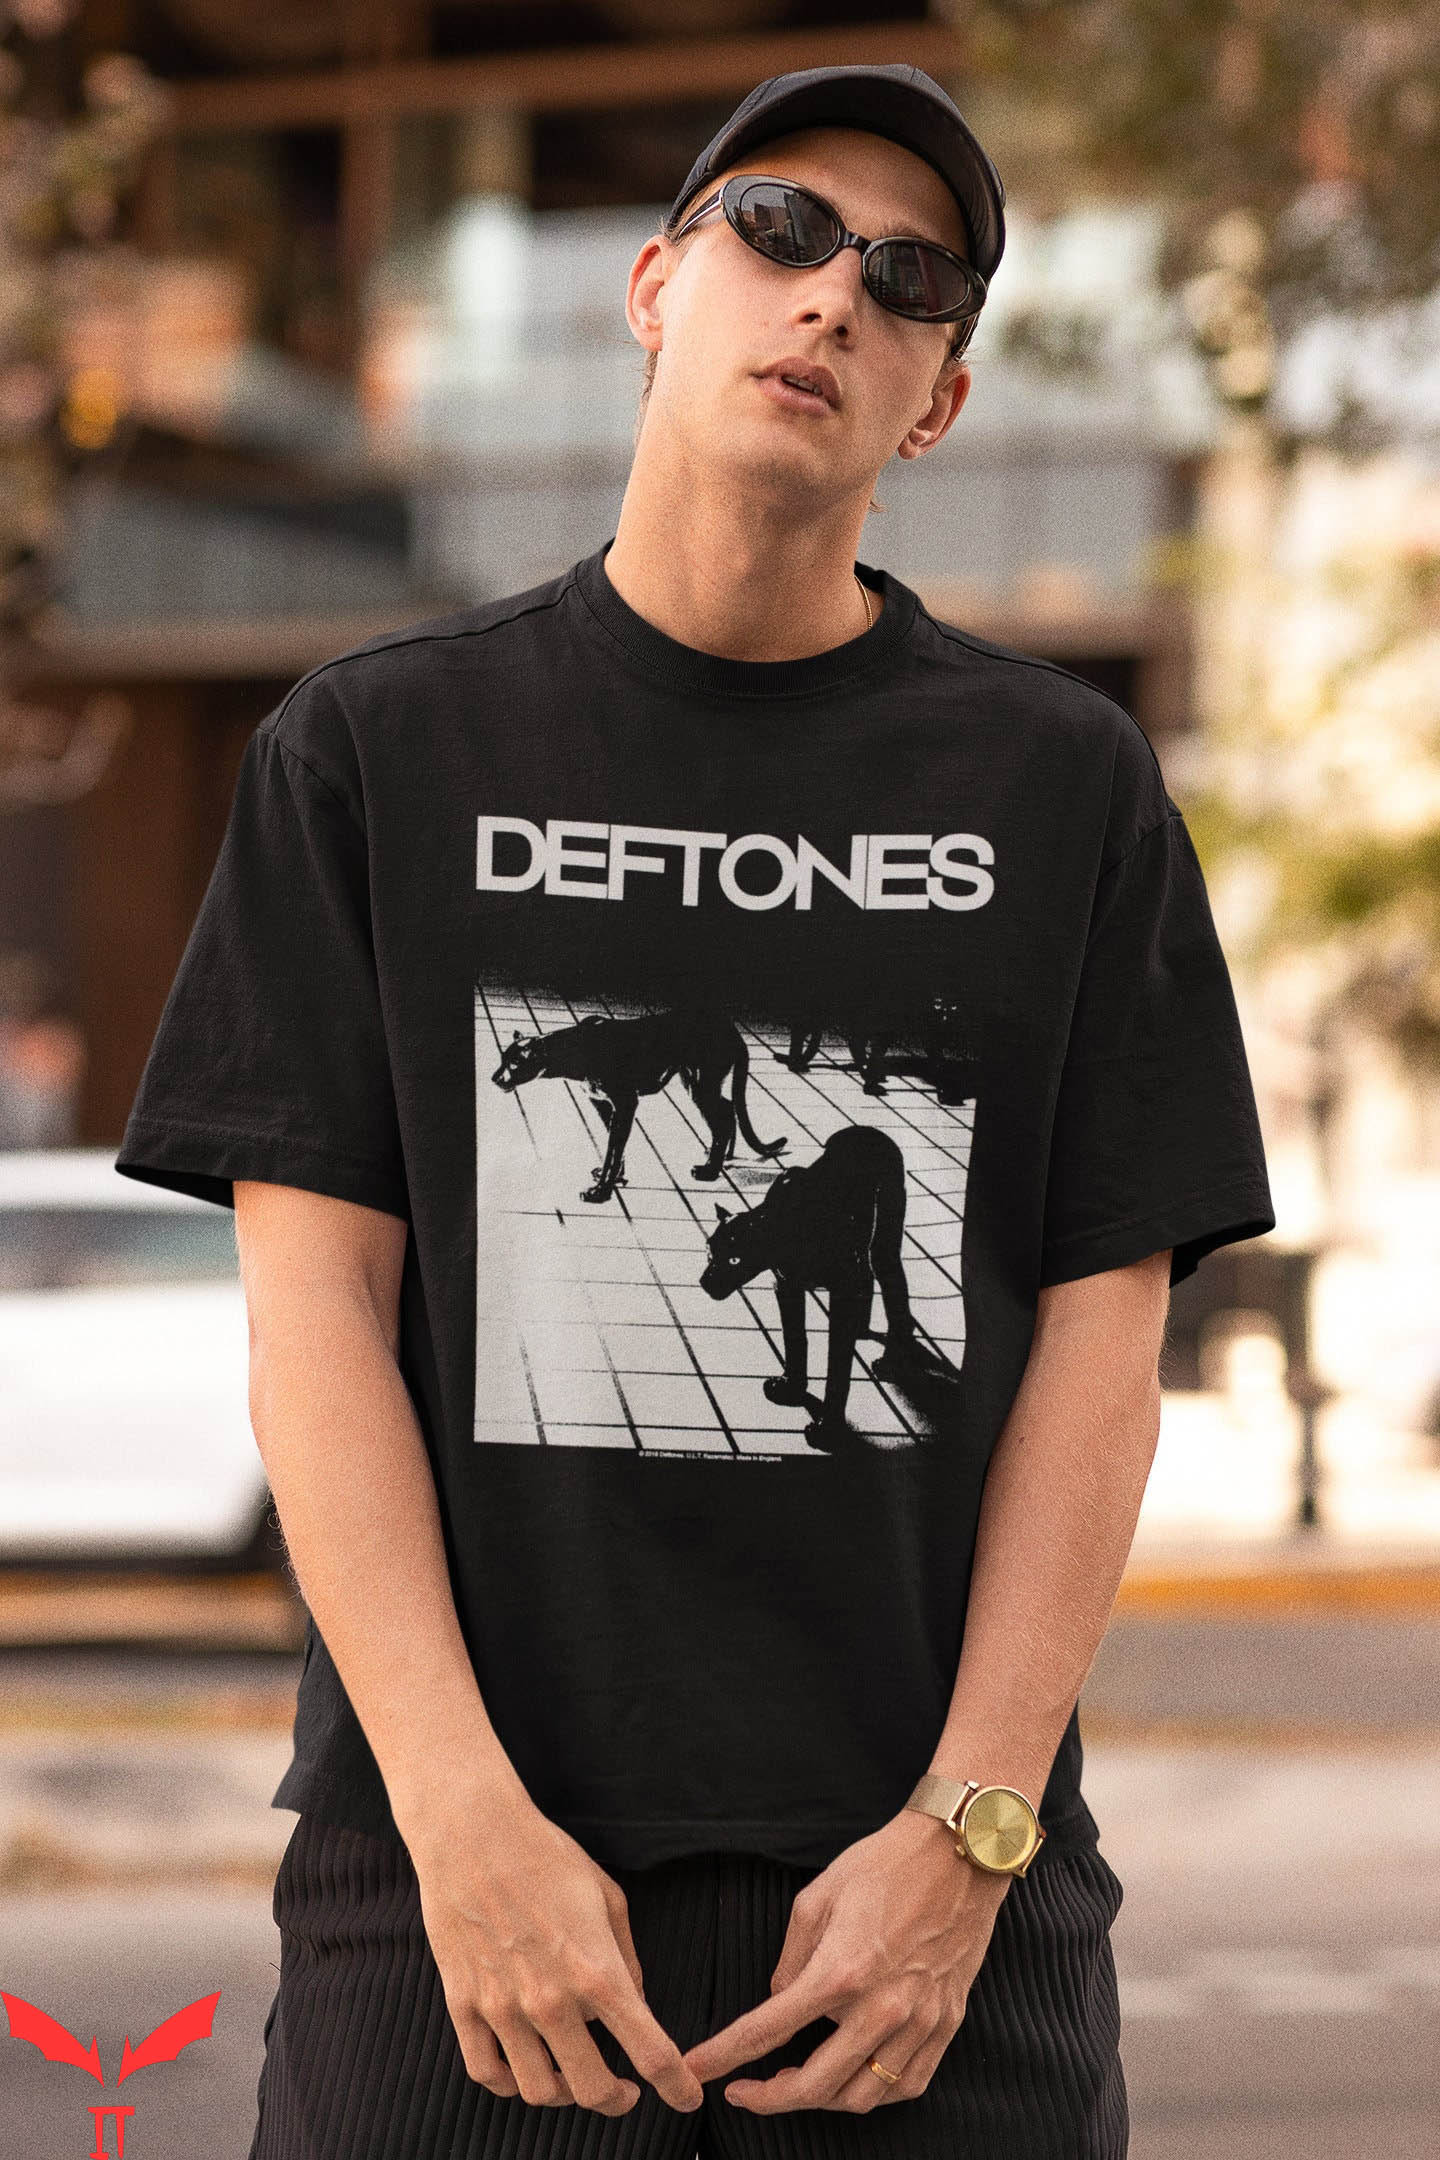 Vintage Deftones T-Shirt Ohm Metal Music Rock Band Tee